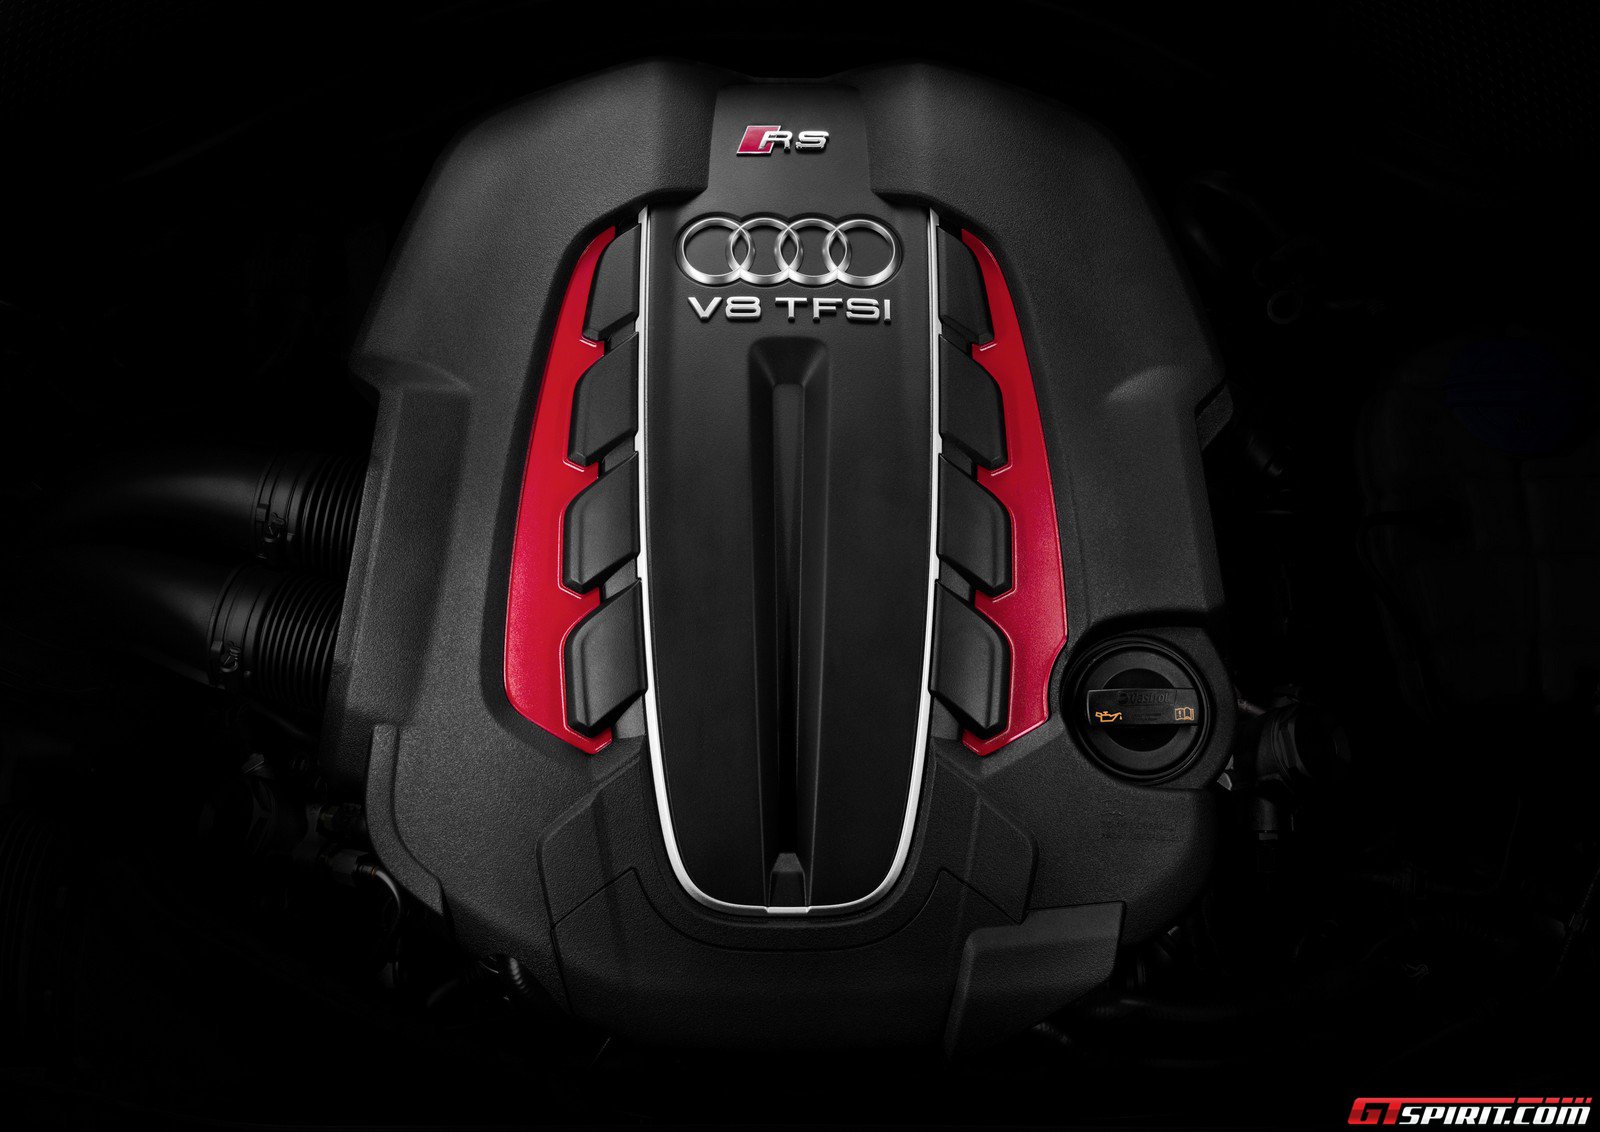 ABT показали тюнинг-пакет для Audi RS6